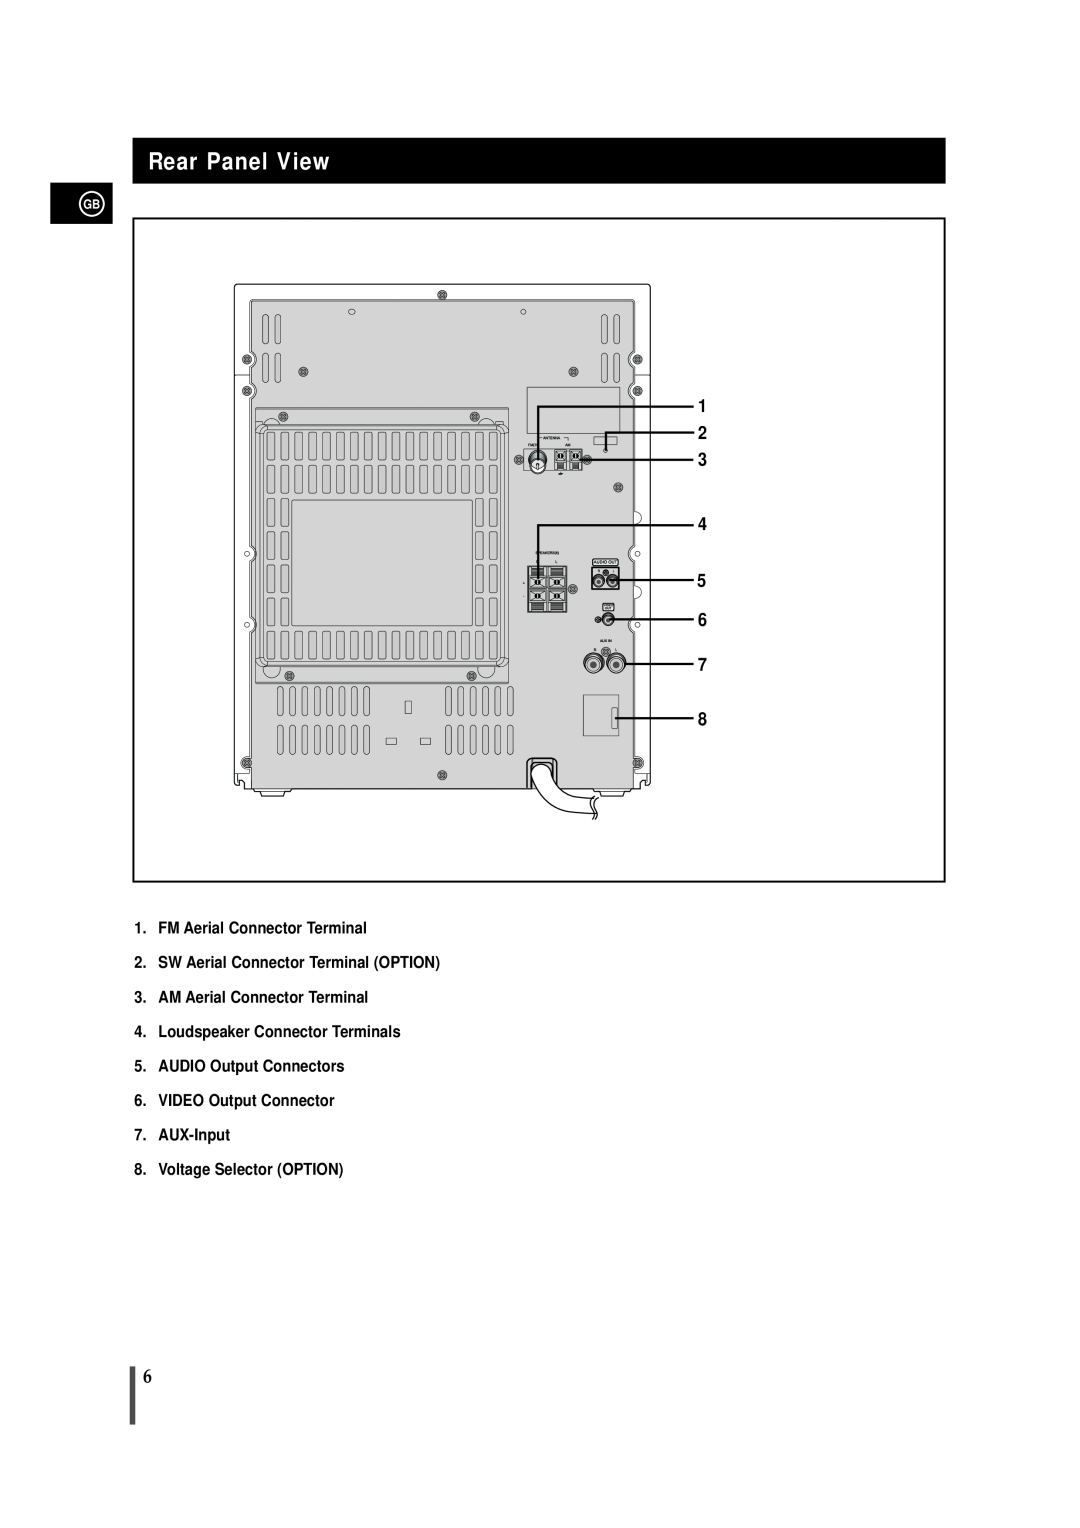 Samsung MAX-VB550, AH68-01145B Rear Panel View, FM Aerial Connector Terminal, SW Aerial Connector Terminal OPTION 